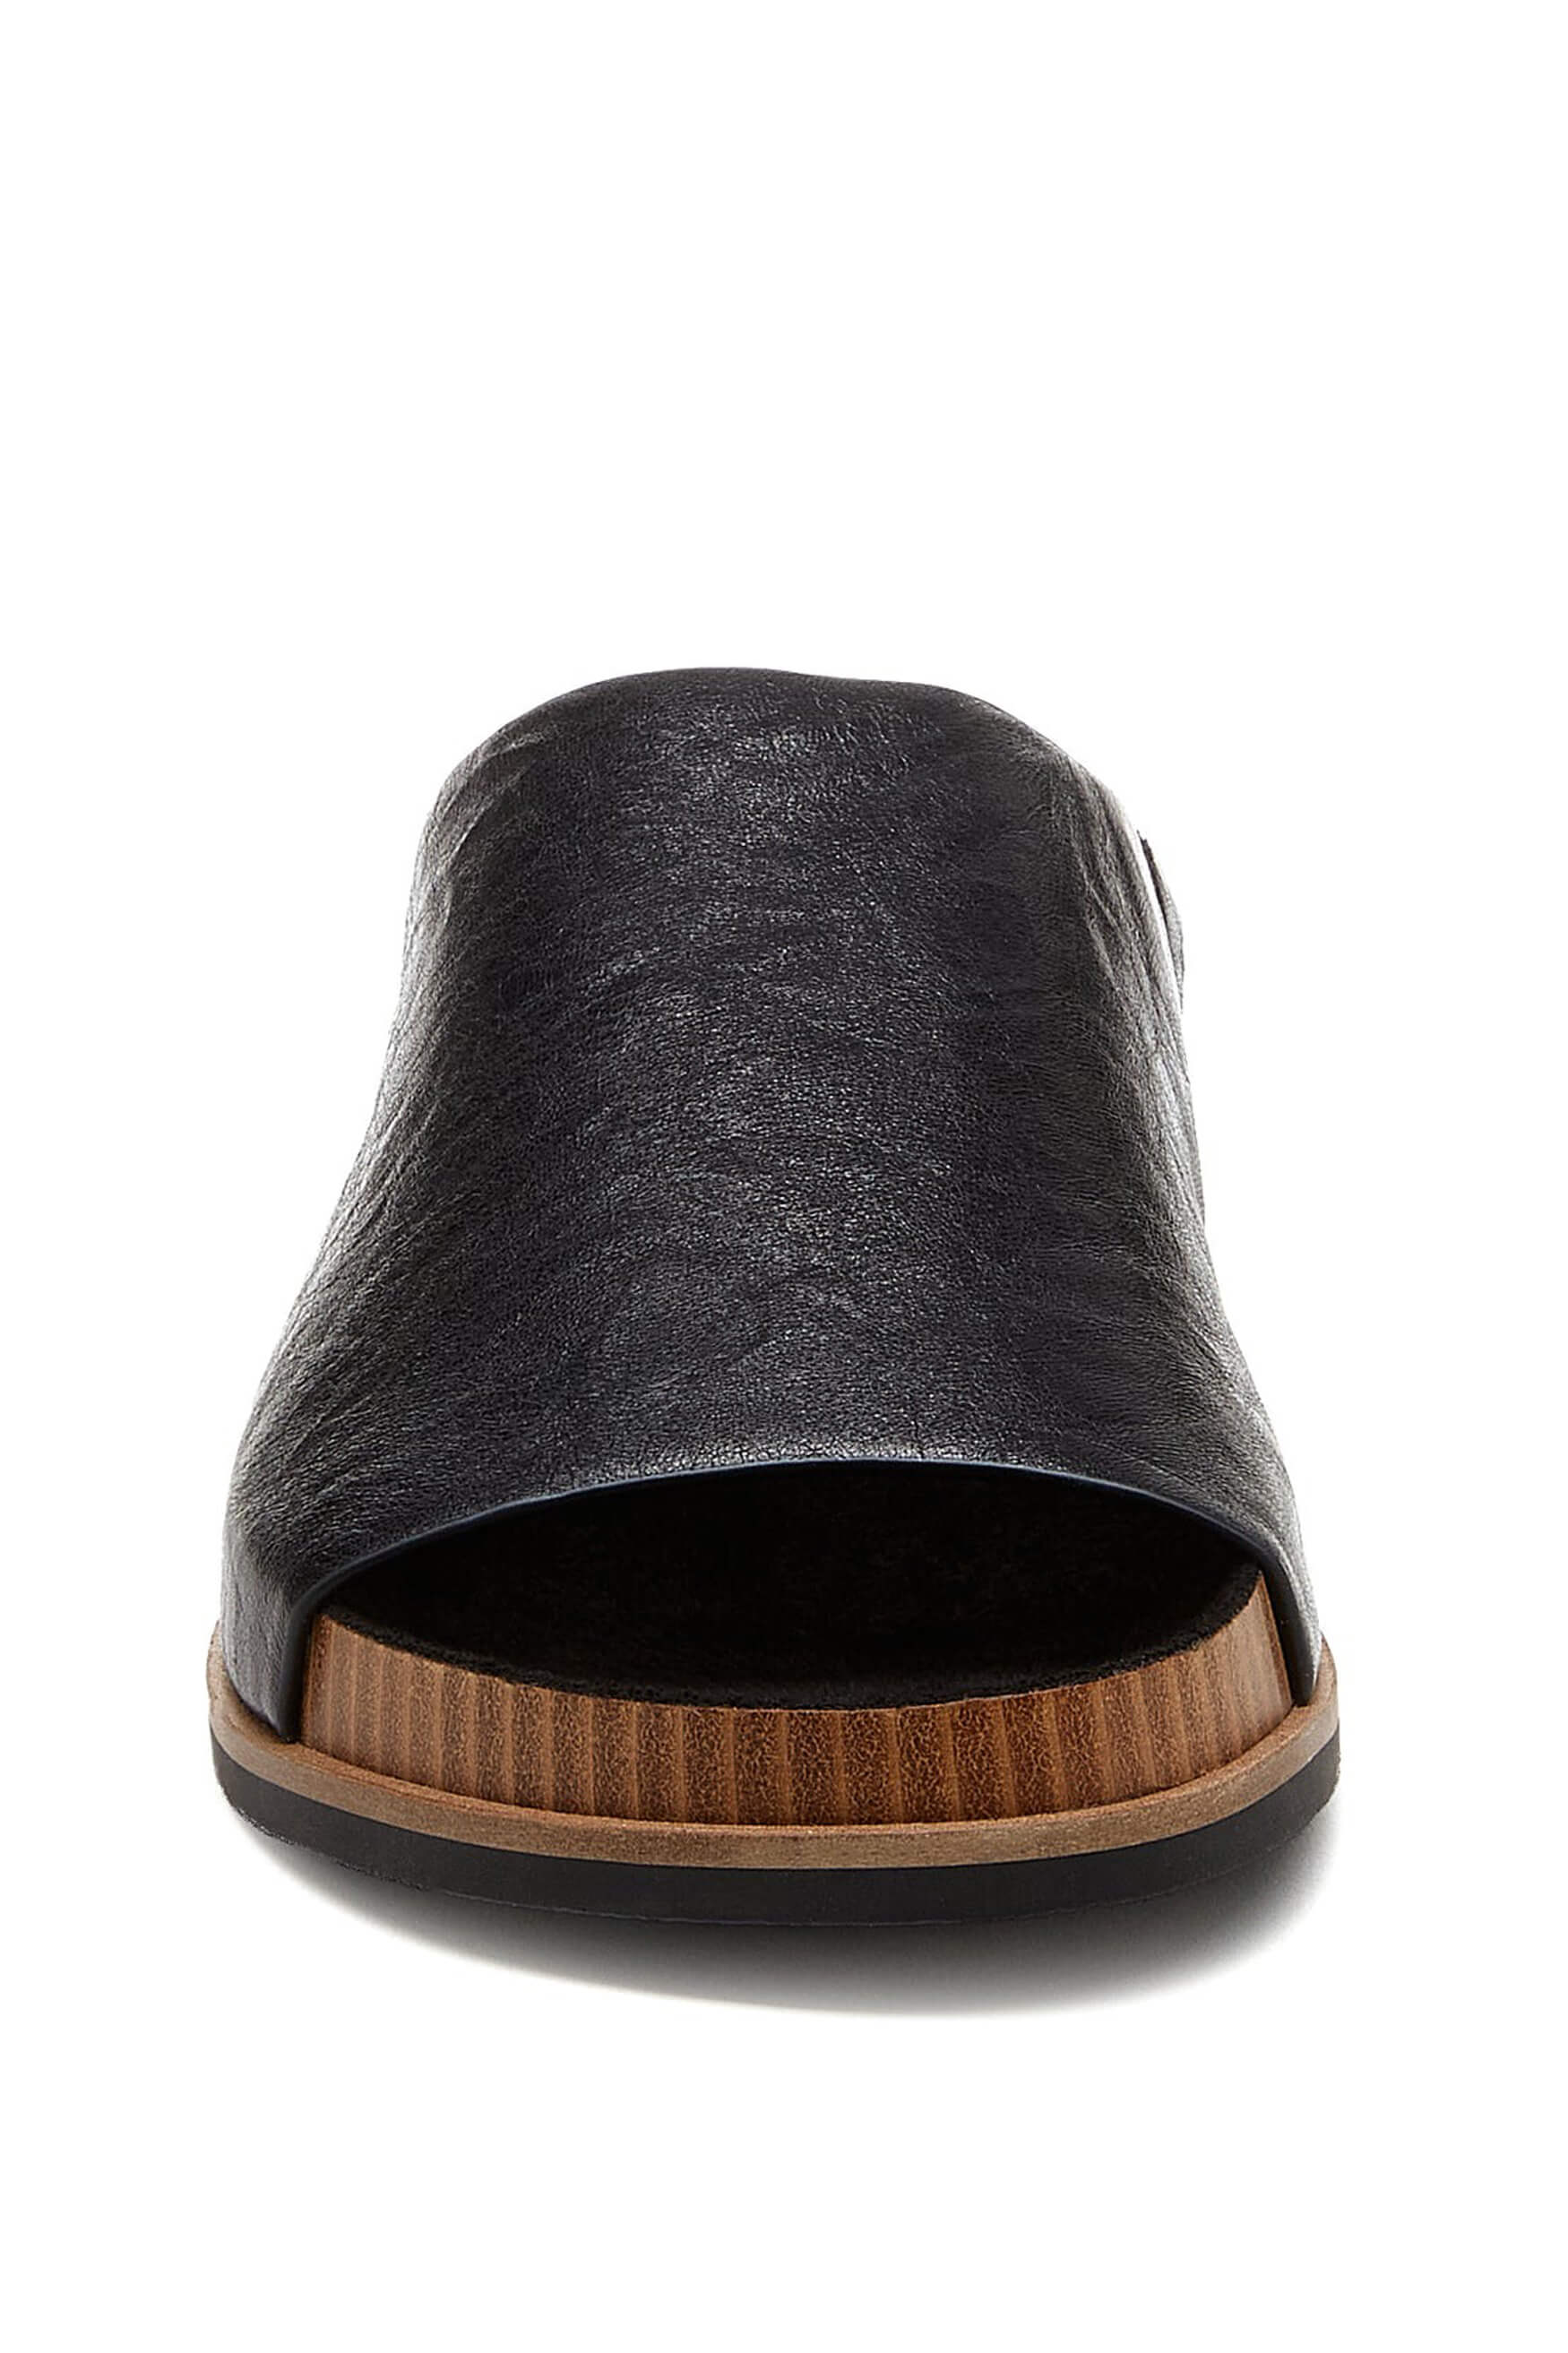 Kelsi Dagger squish staked slide sandals in black